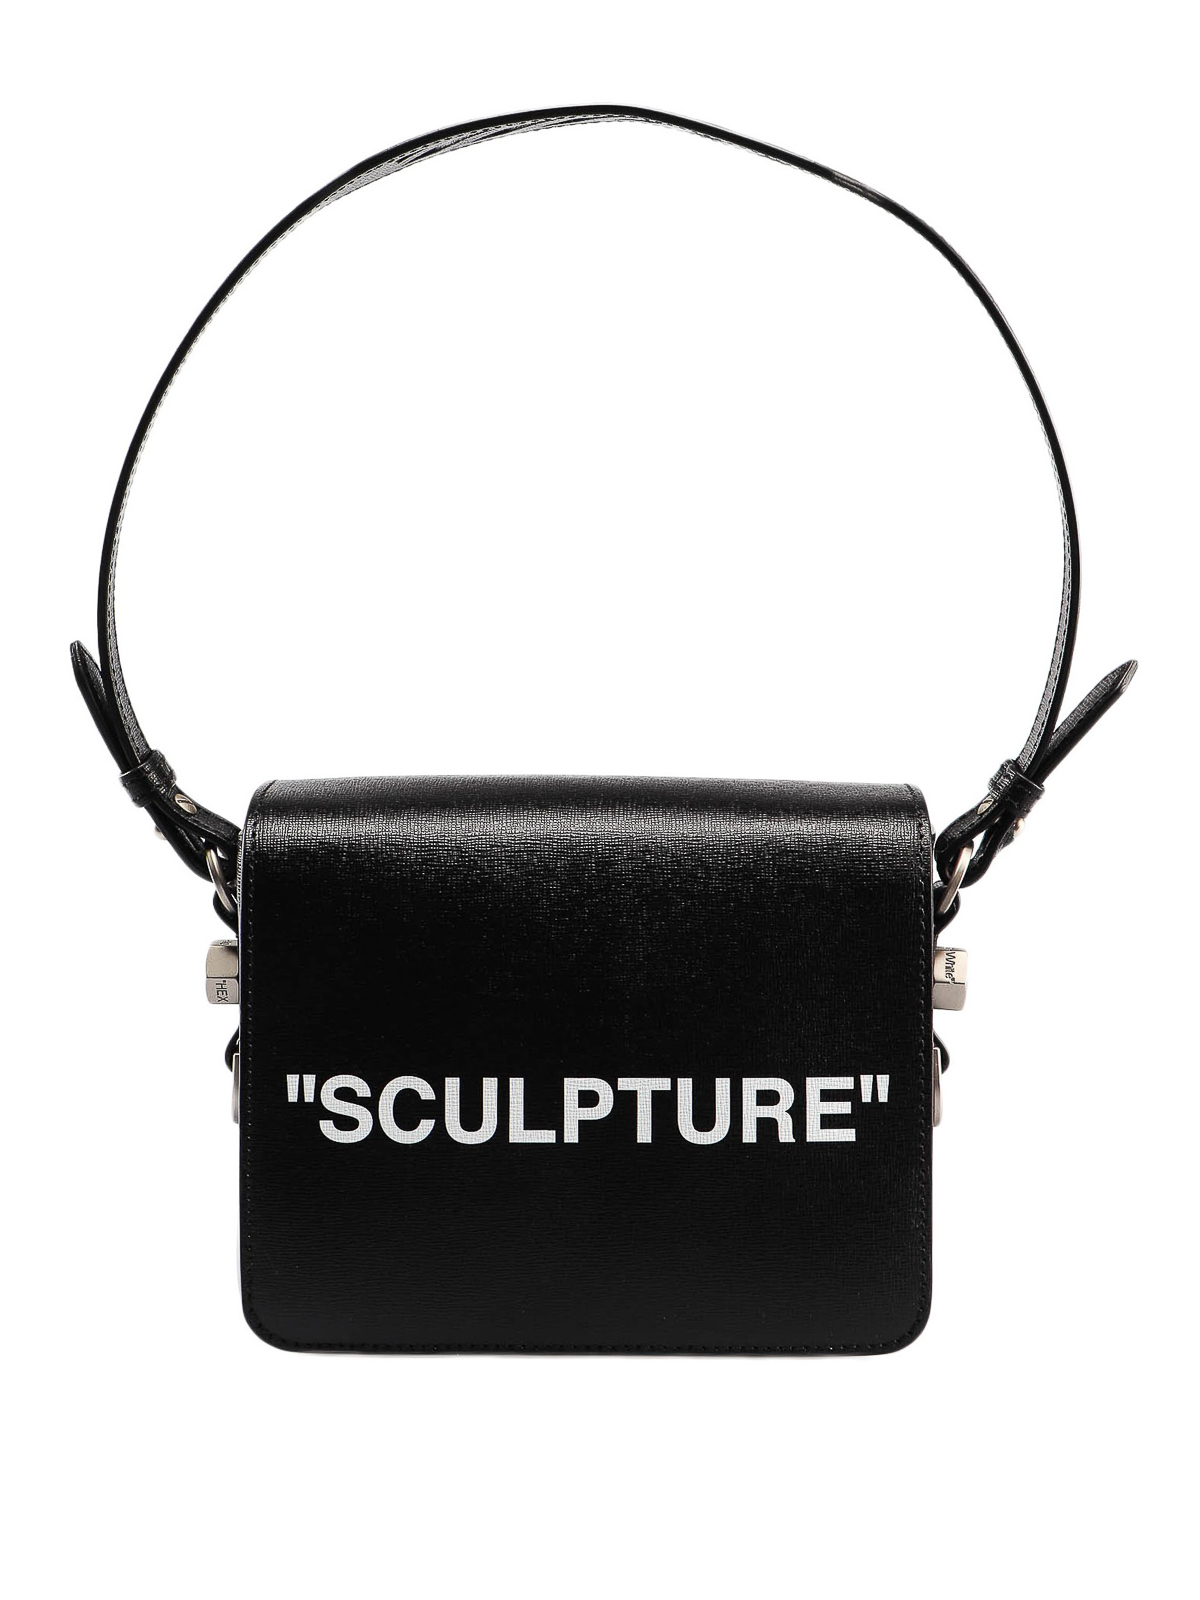 Off-White Sculpture Leather Shoulder Bag (£790) ❤ liked on